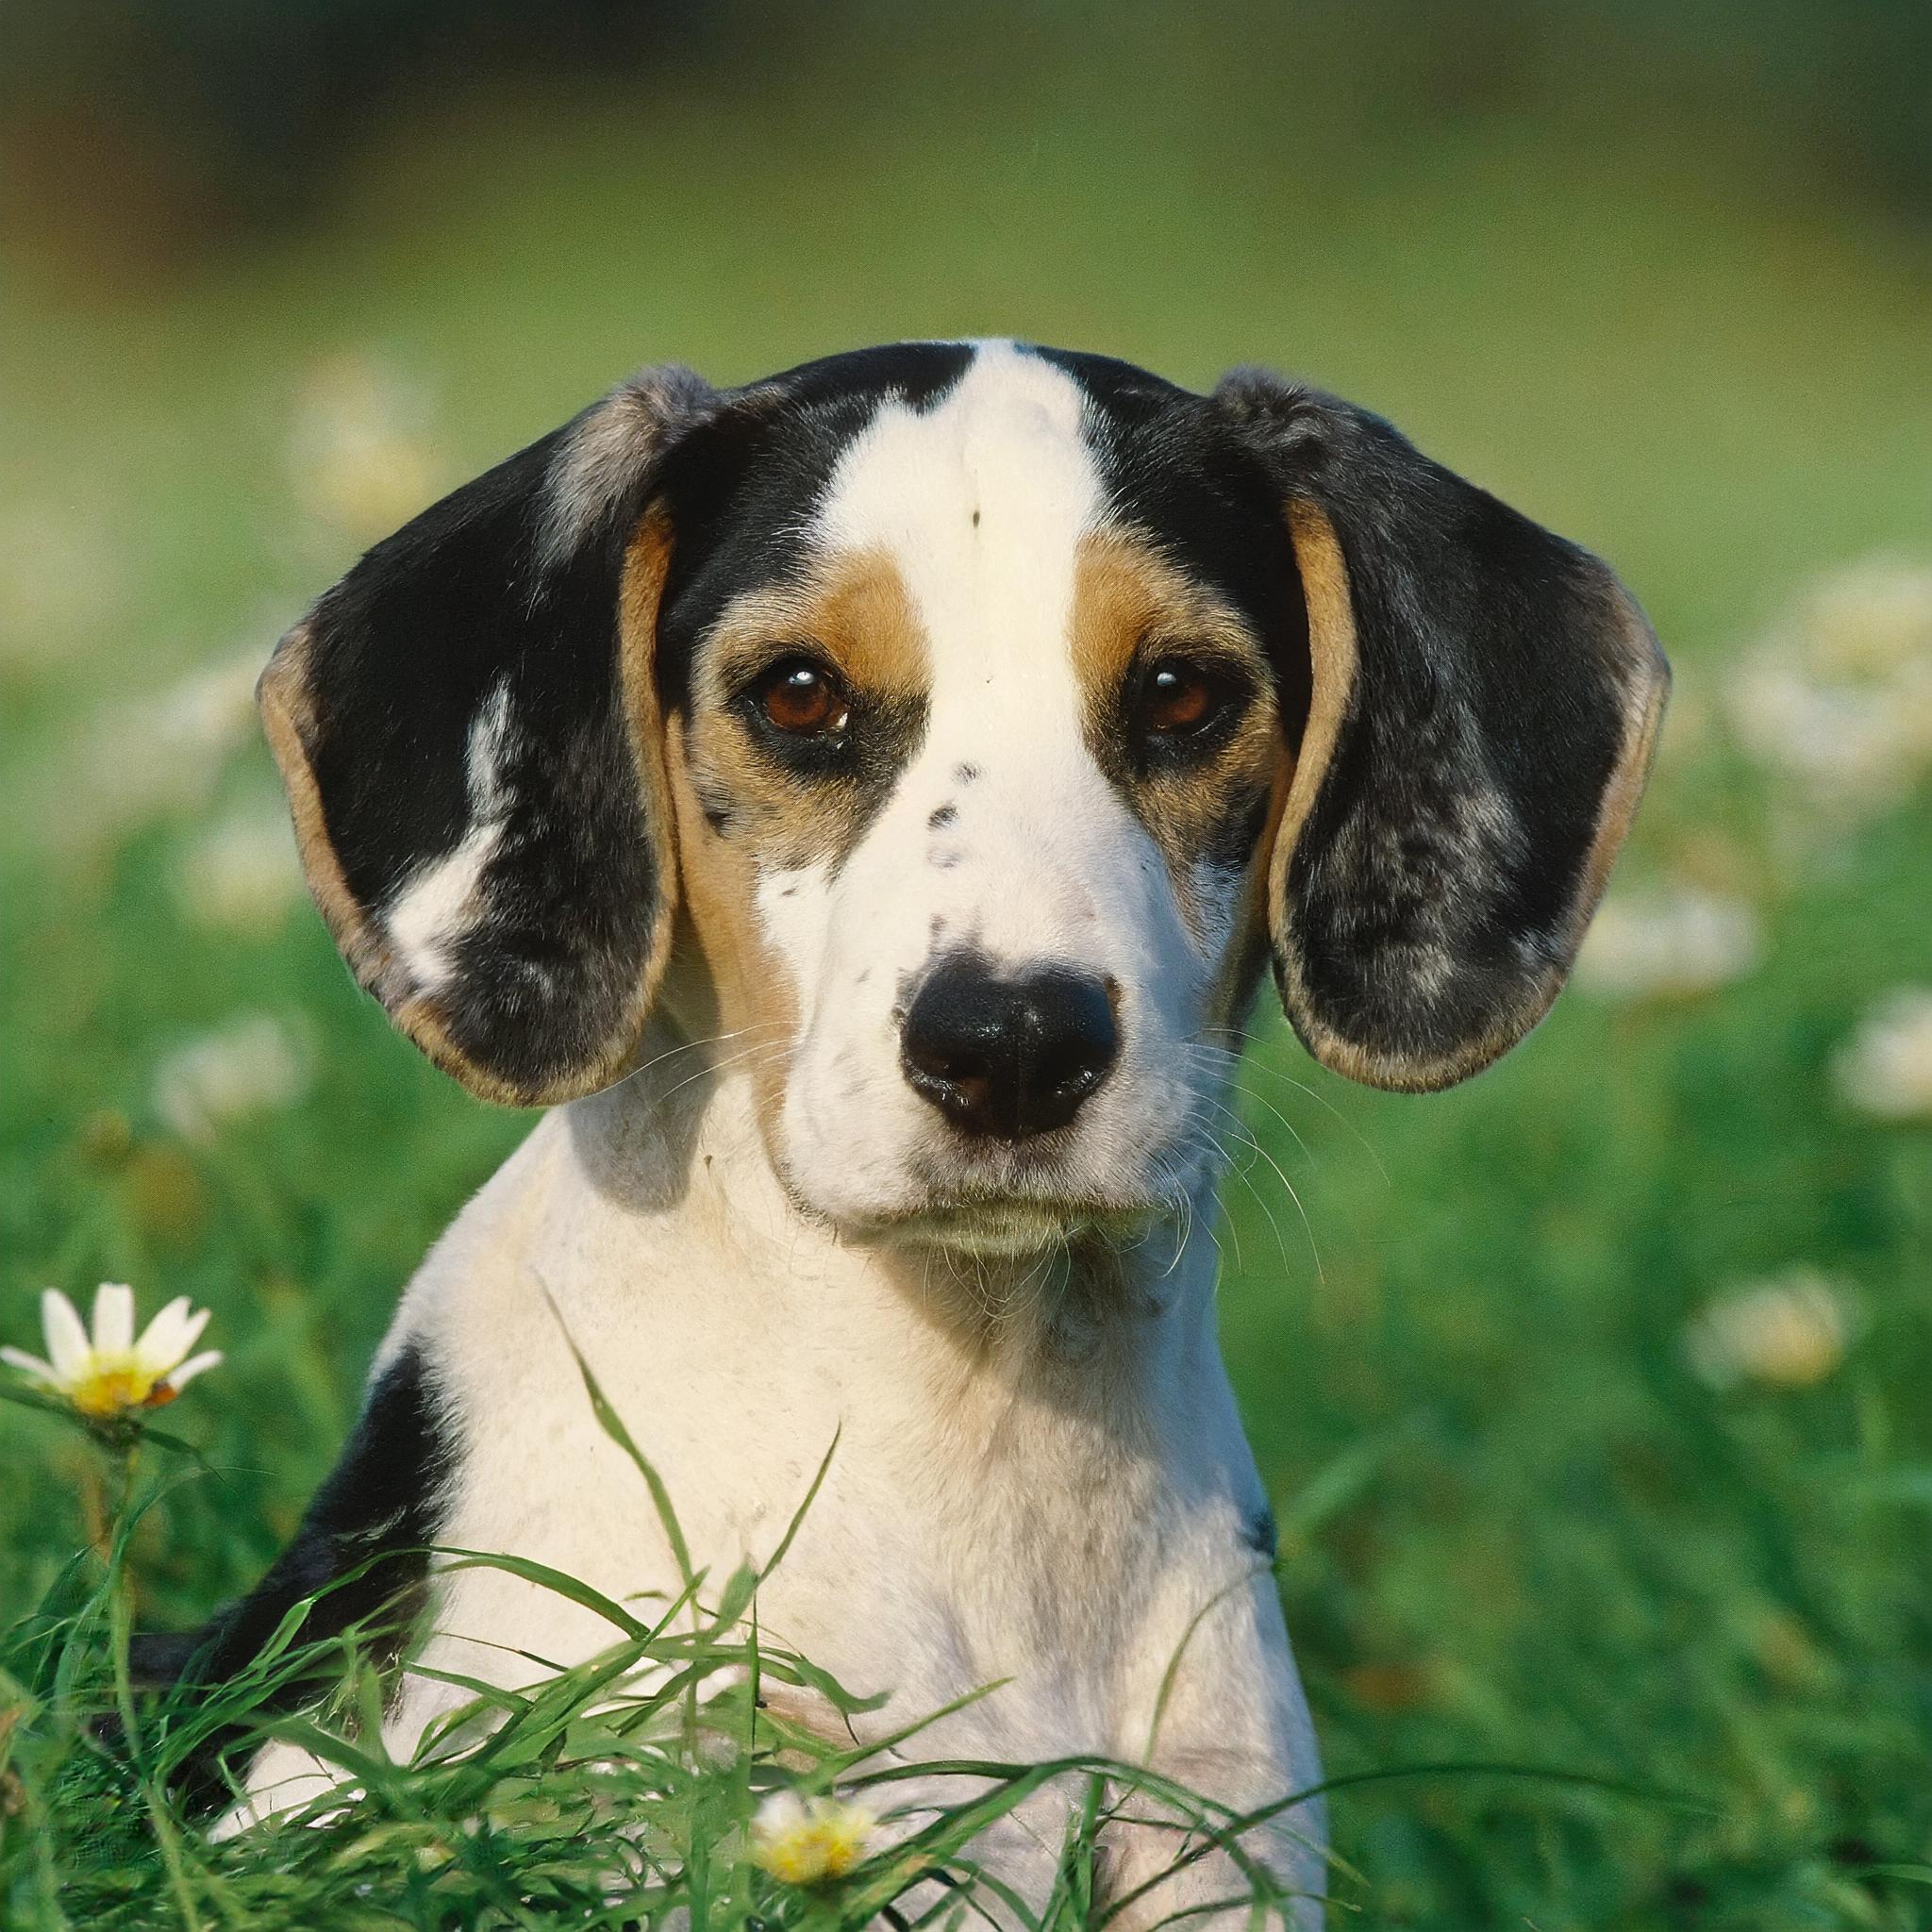 A cute Ariégeois puppy in a field of flowers